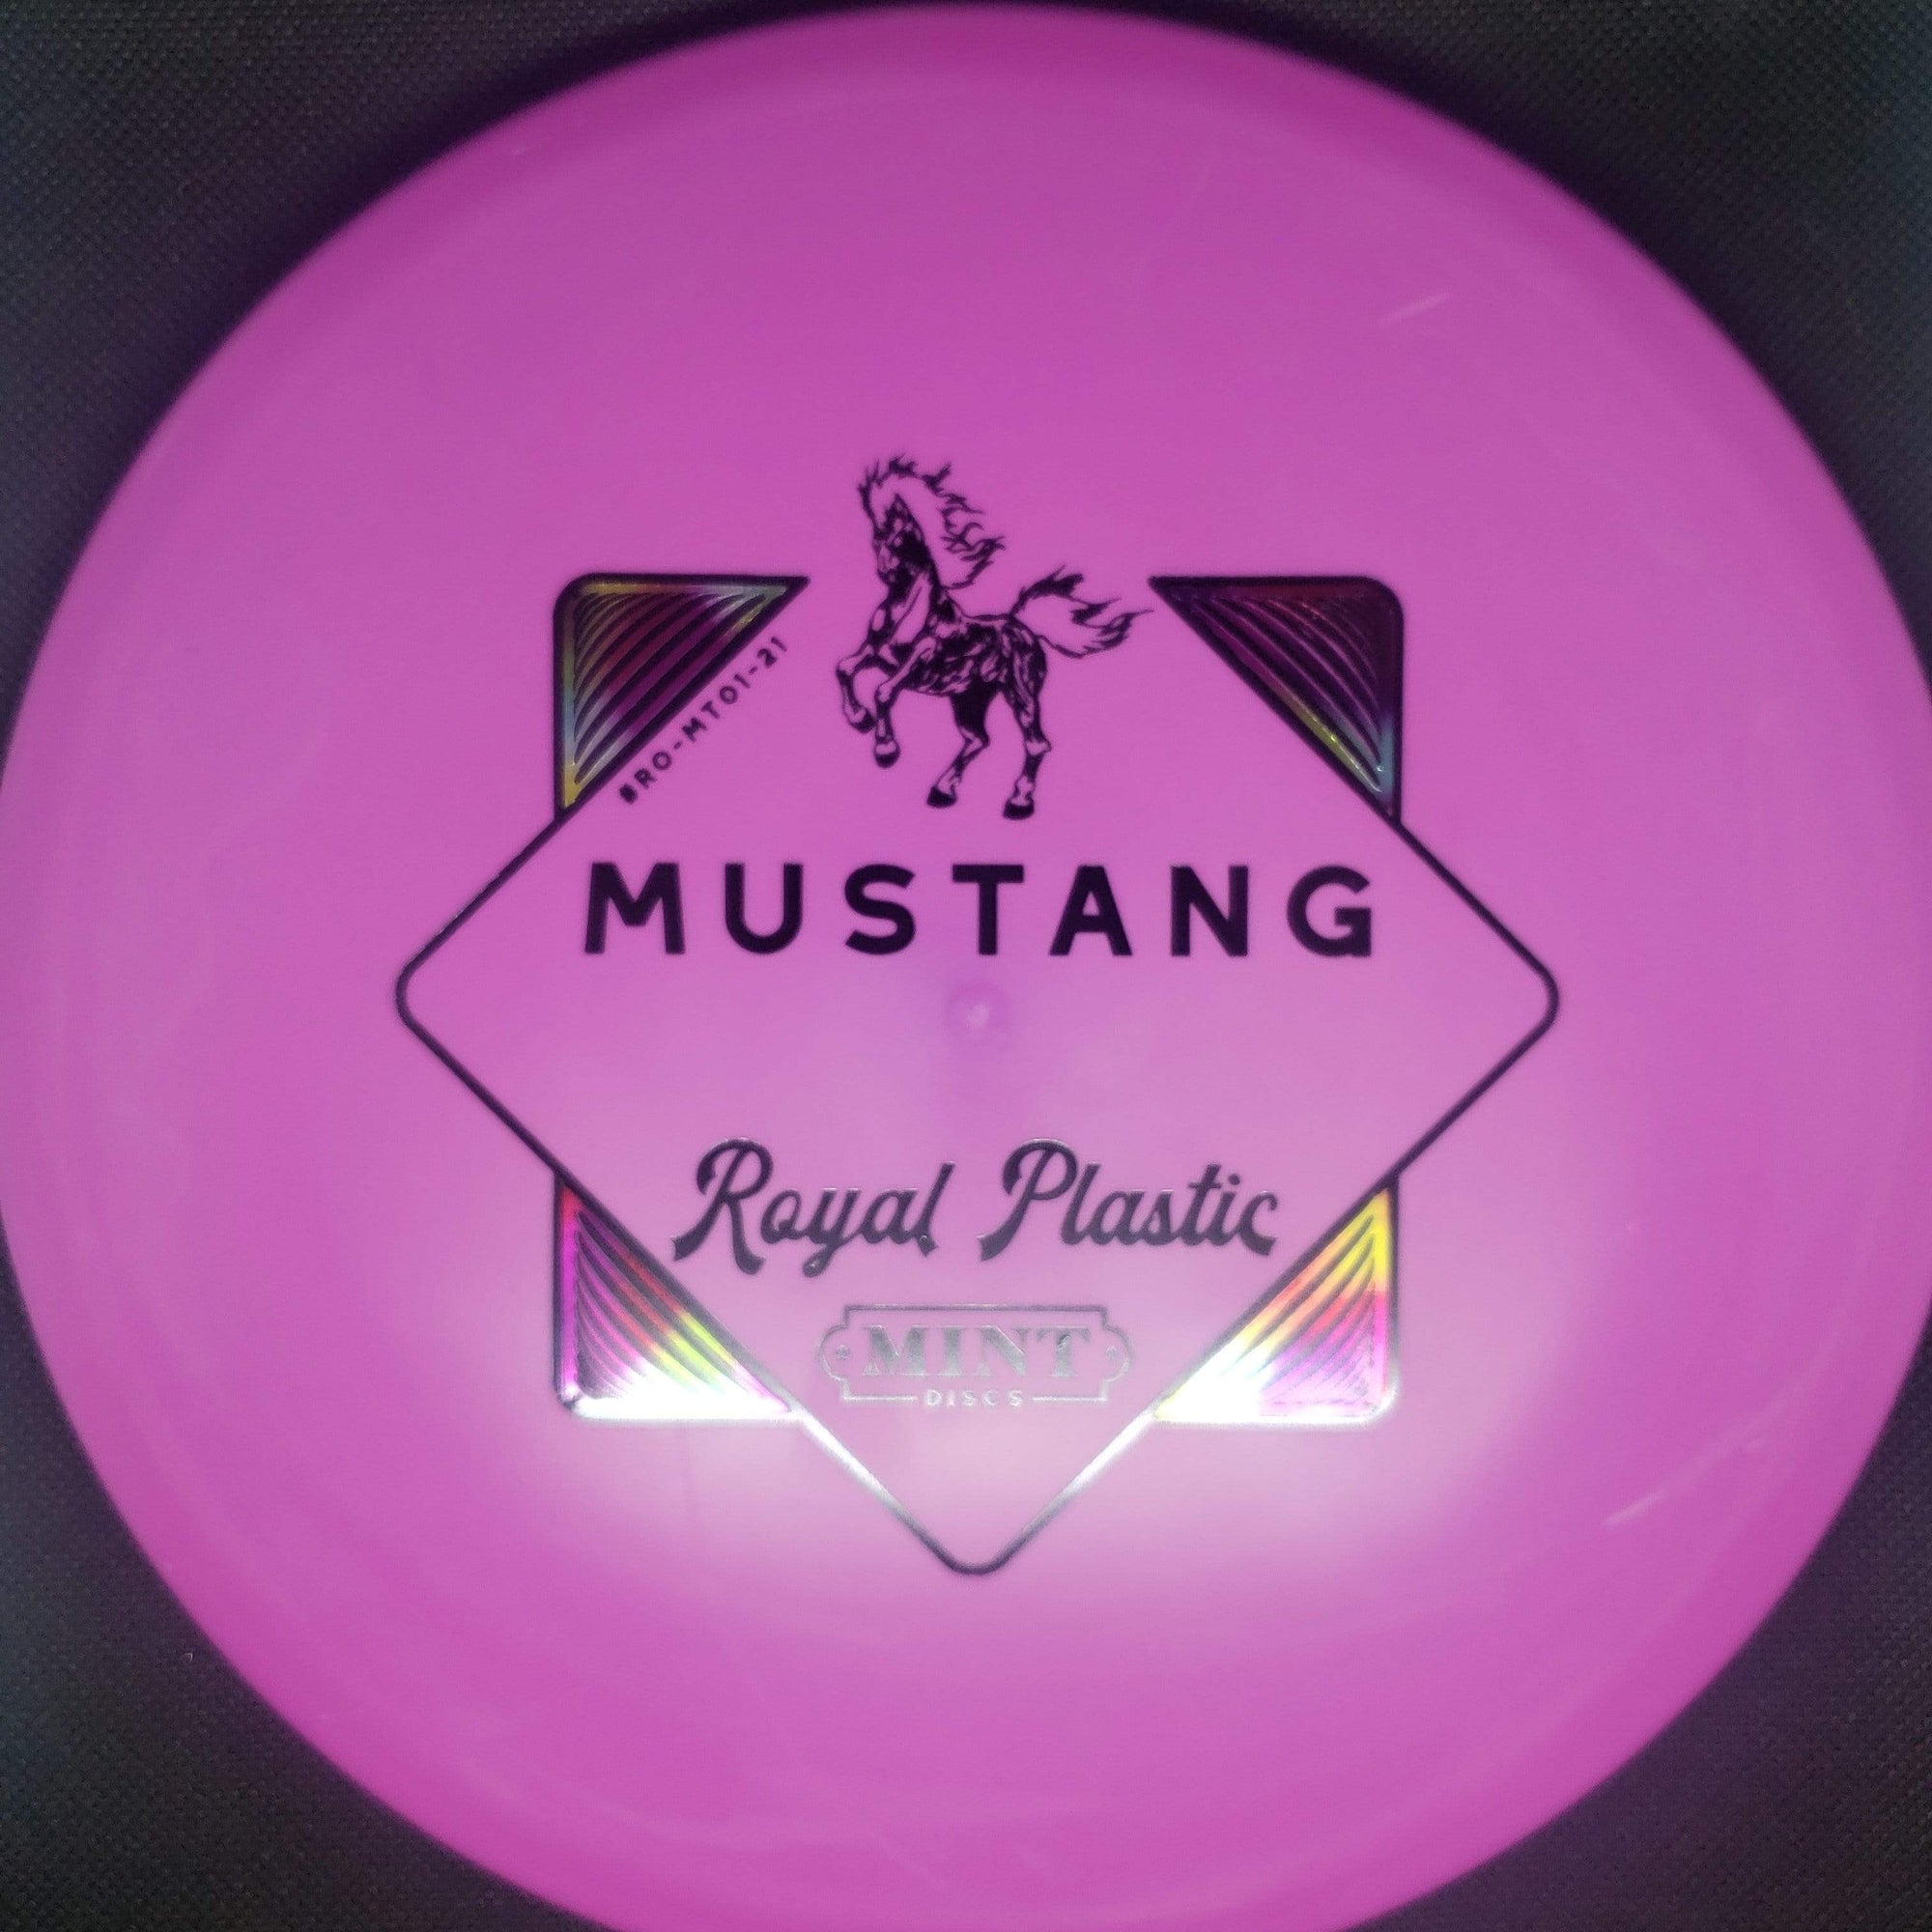 Mint Discs Mid Range Violet Rainbow Stamp 176g Mustang - Royal Plastic